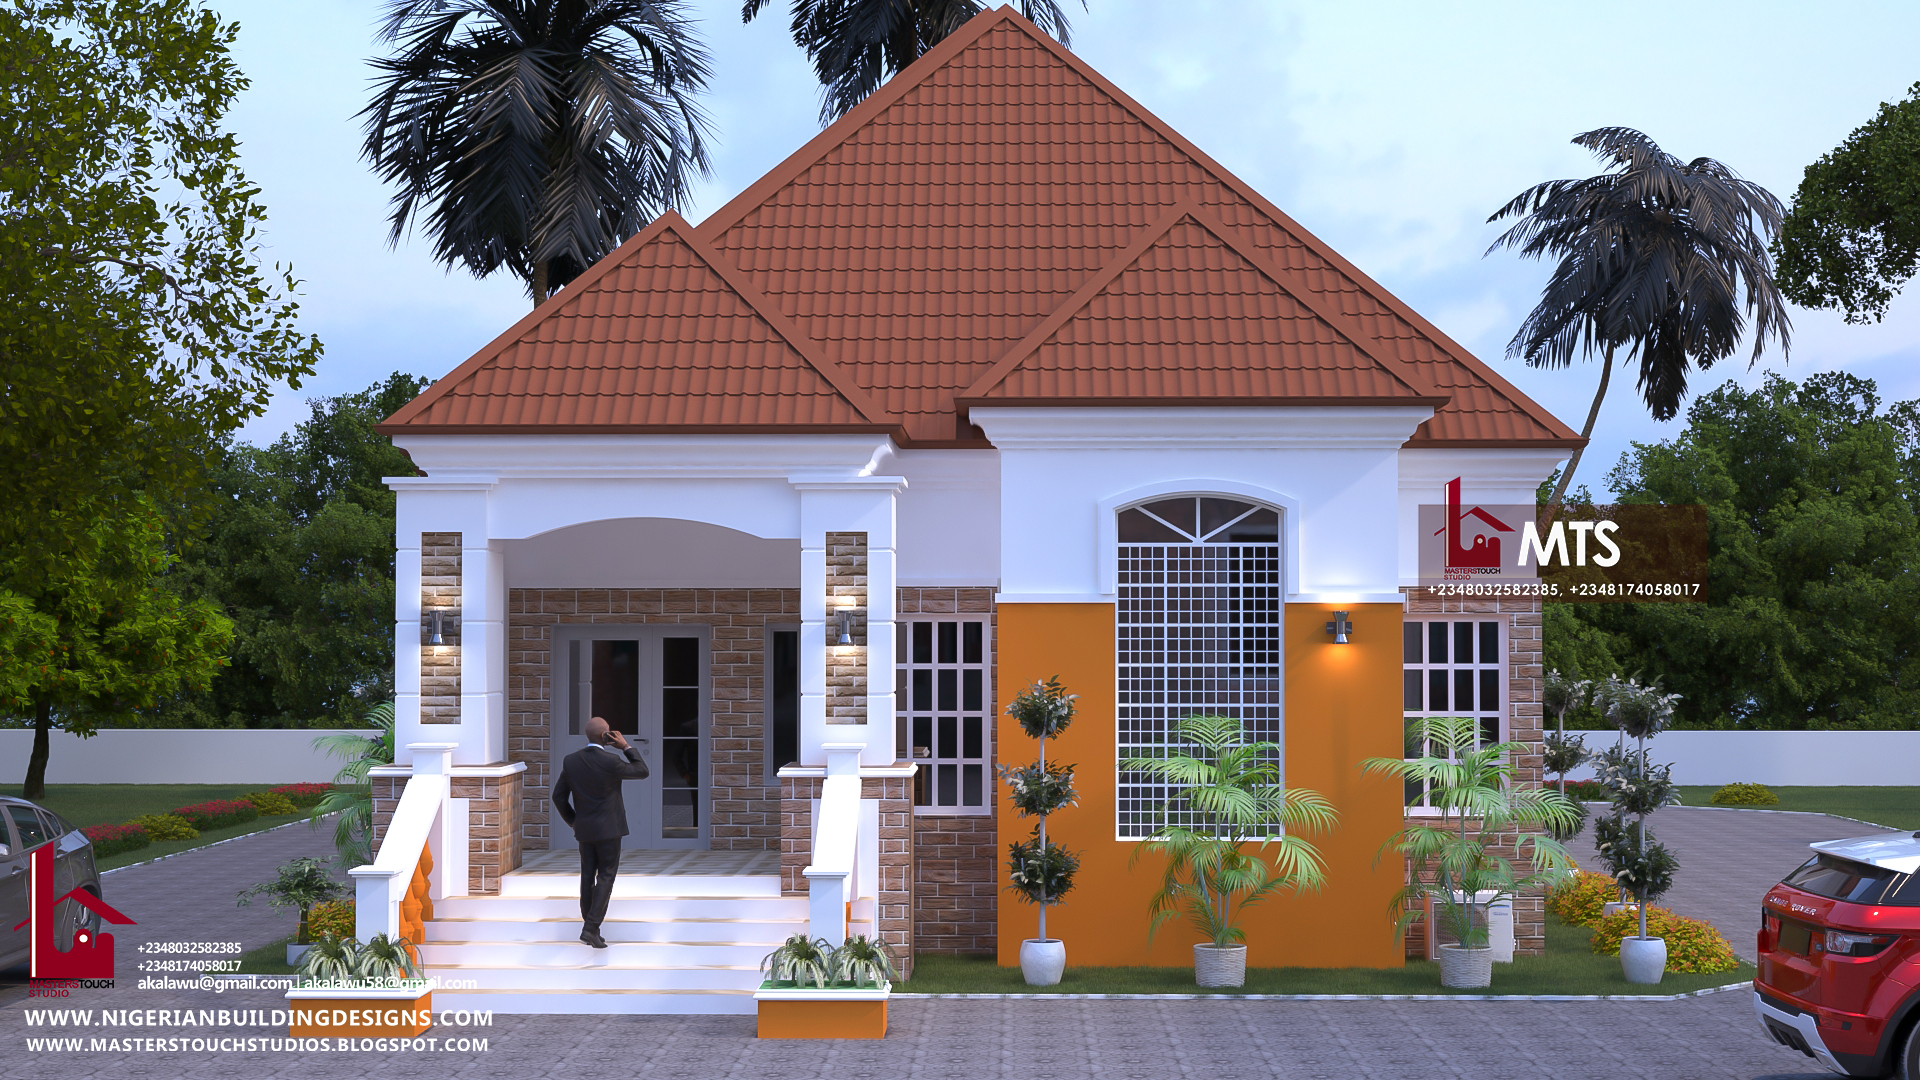 3 Bedroom Bungalow Rf 3007 Nigerian Building Designs